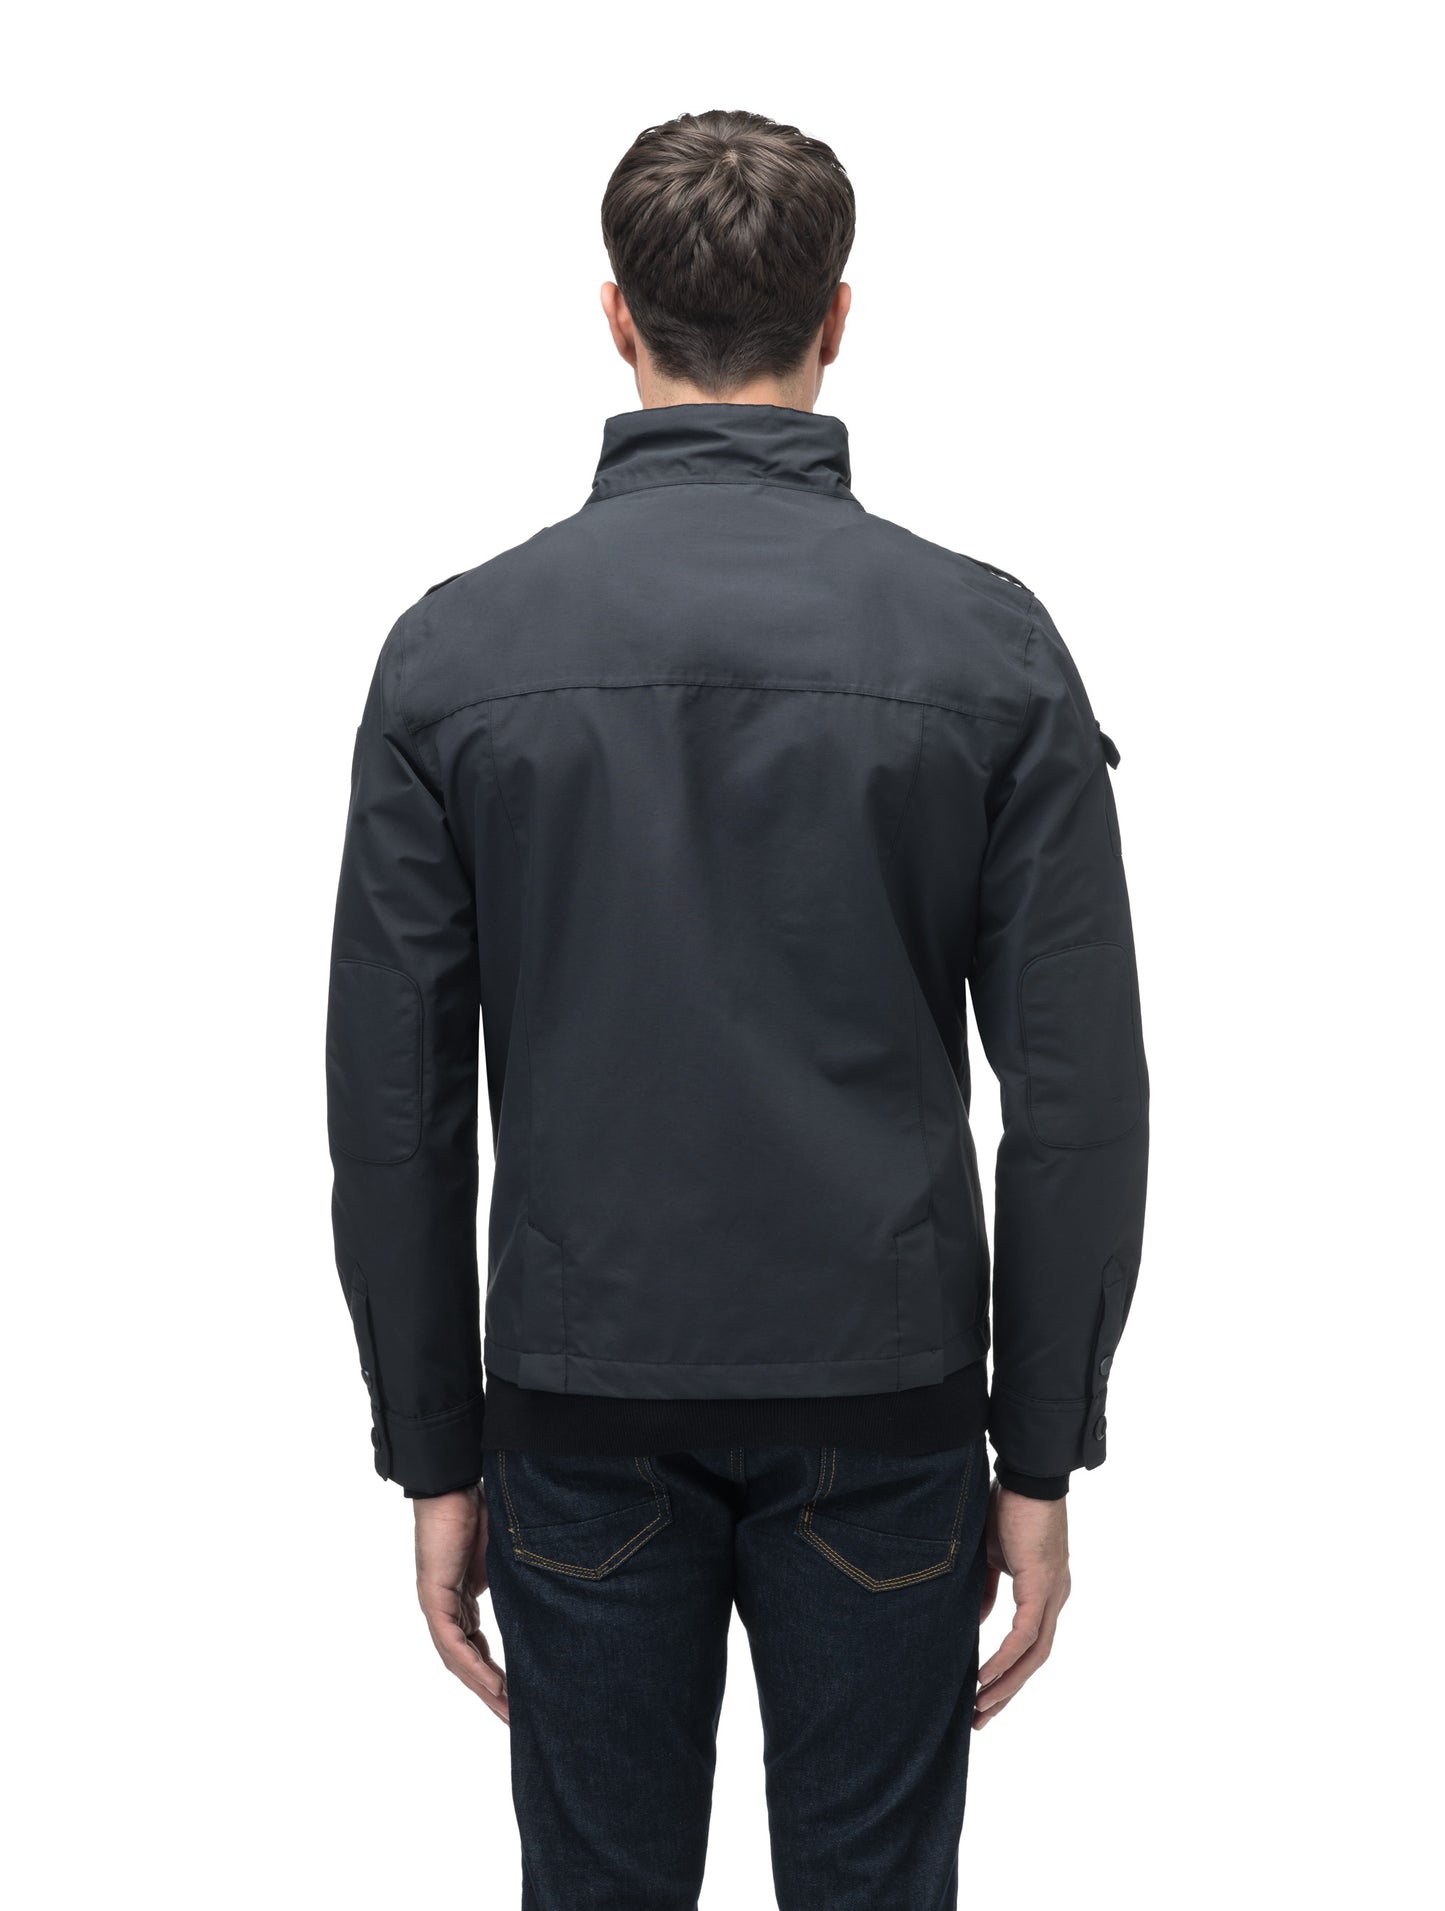 Men's waist length military style jacket in Black